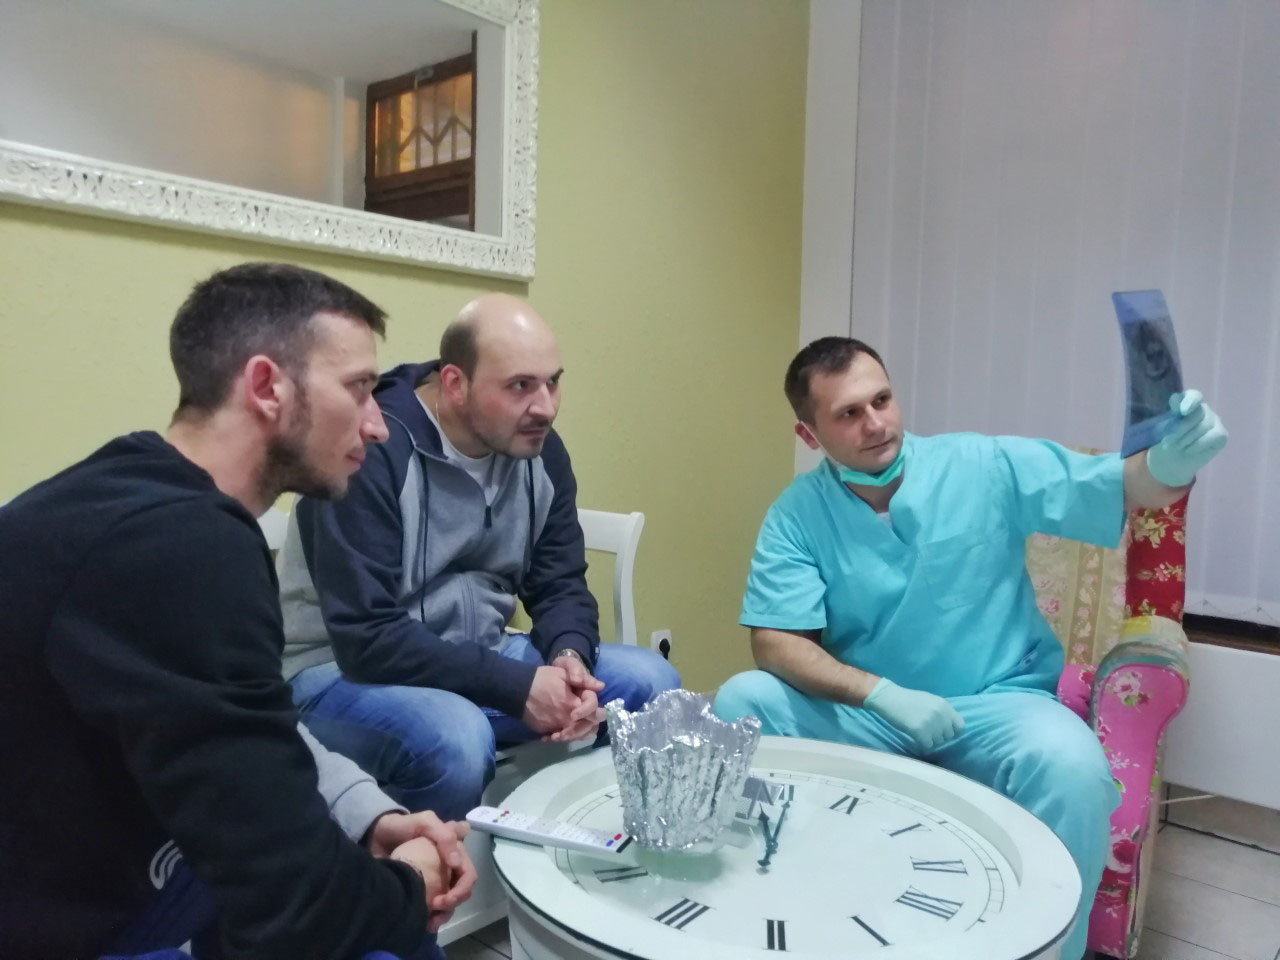 DR KALEZIC DENTAL OFFICE Dental surgery Beograd